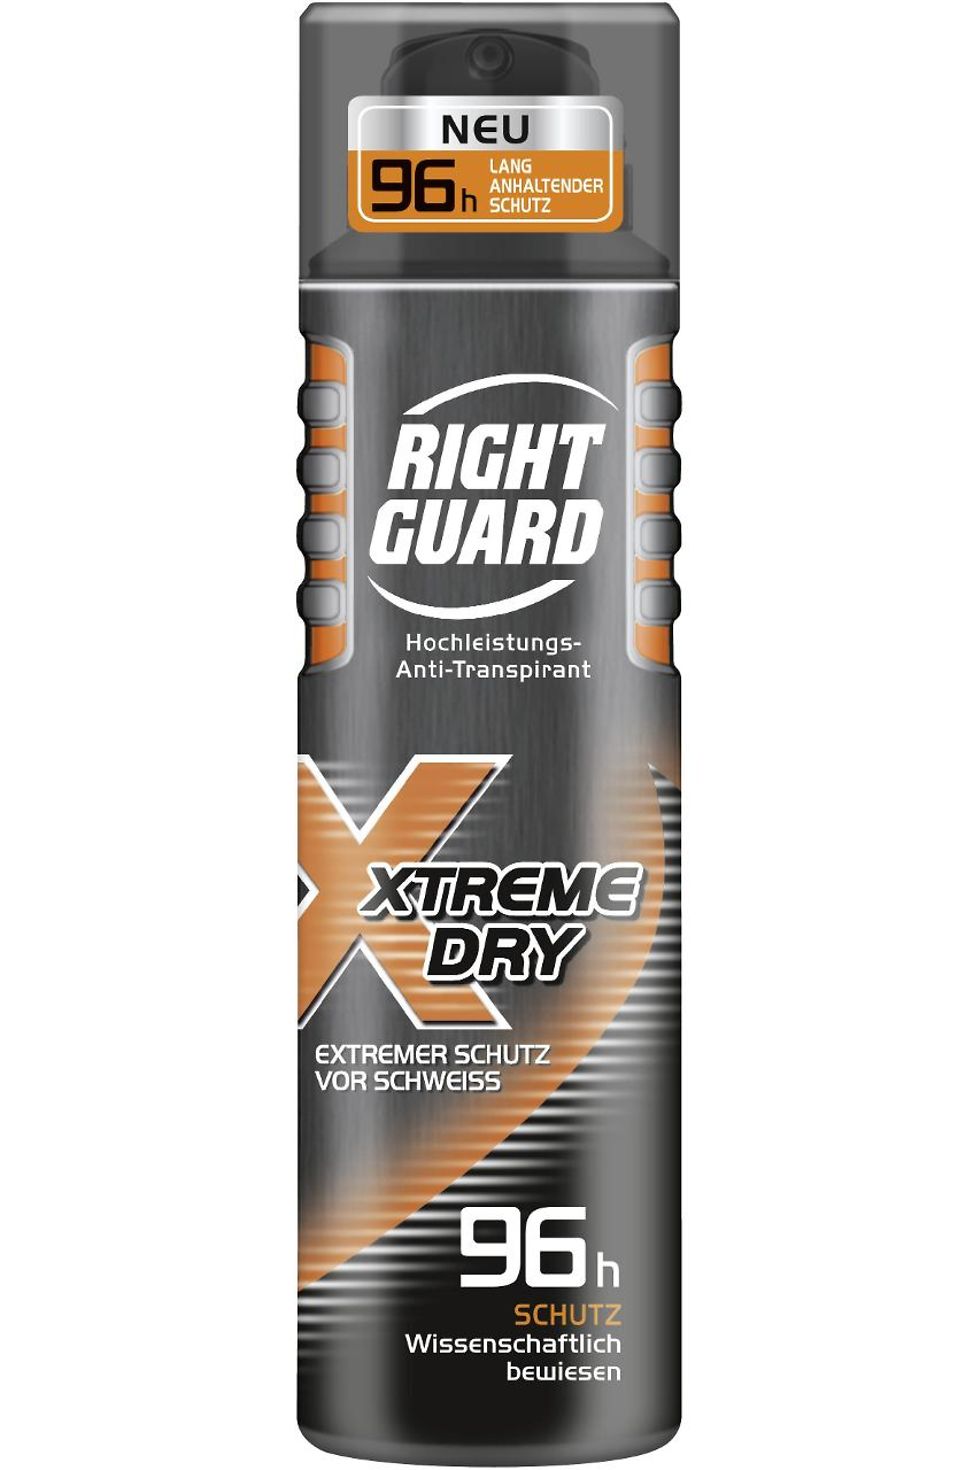 Right Guard Xtreme Dry 96h Hochleistungs-Anti-Transpirant Deospray